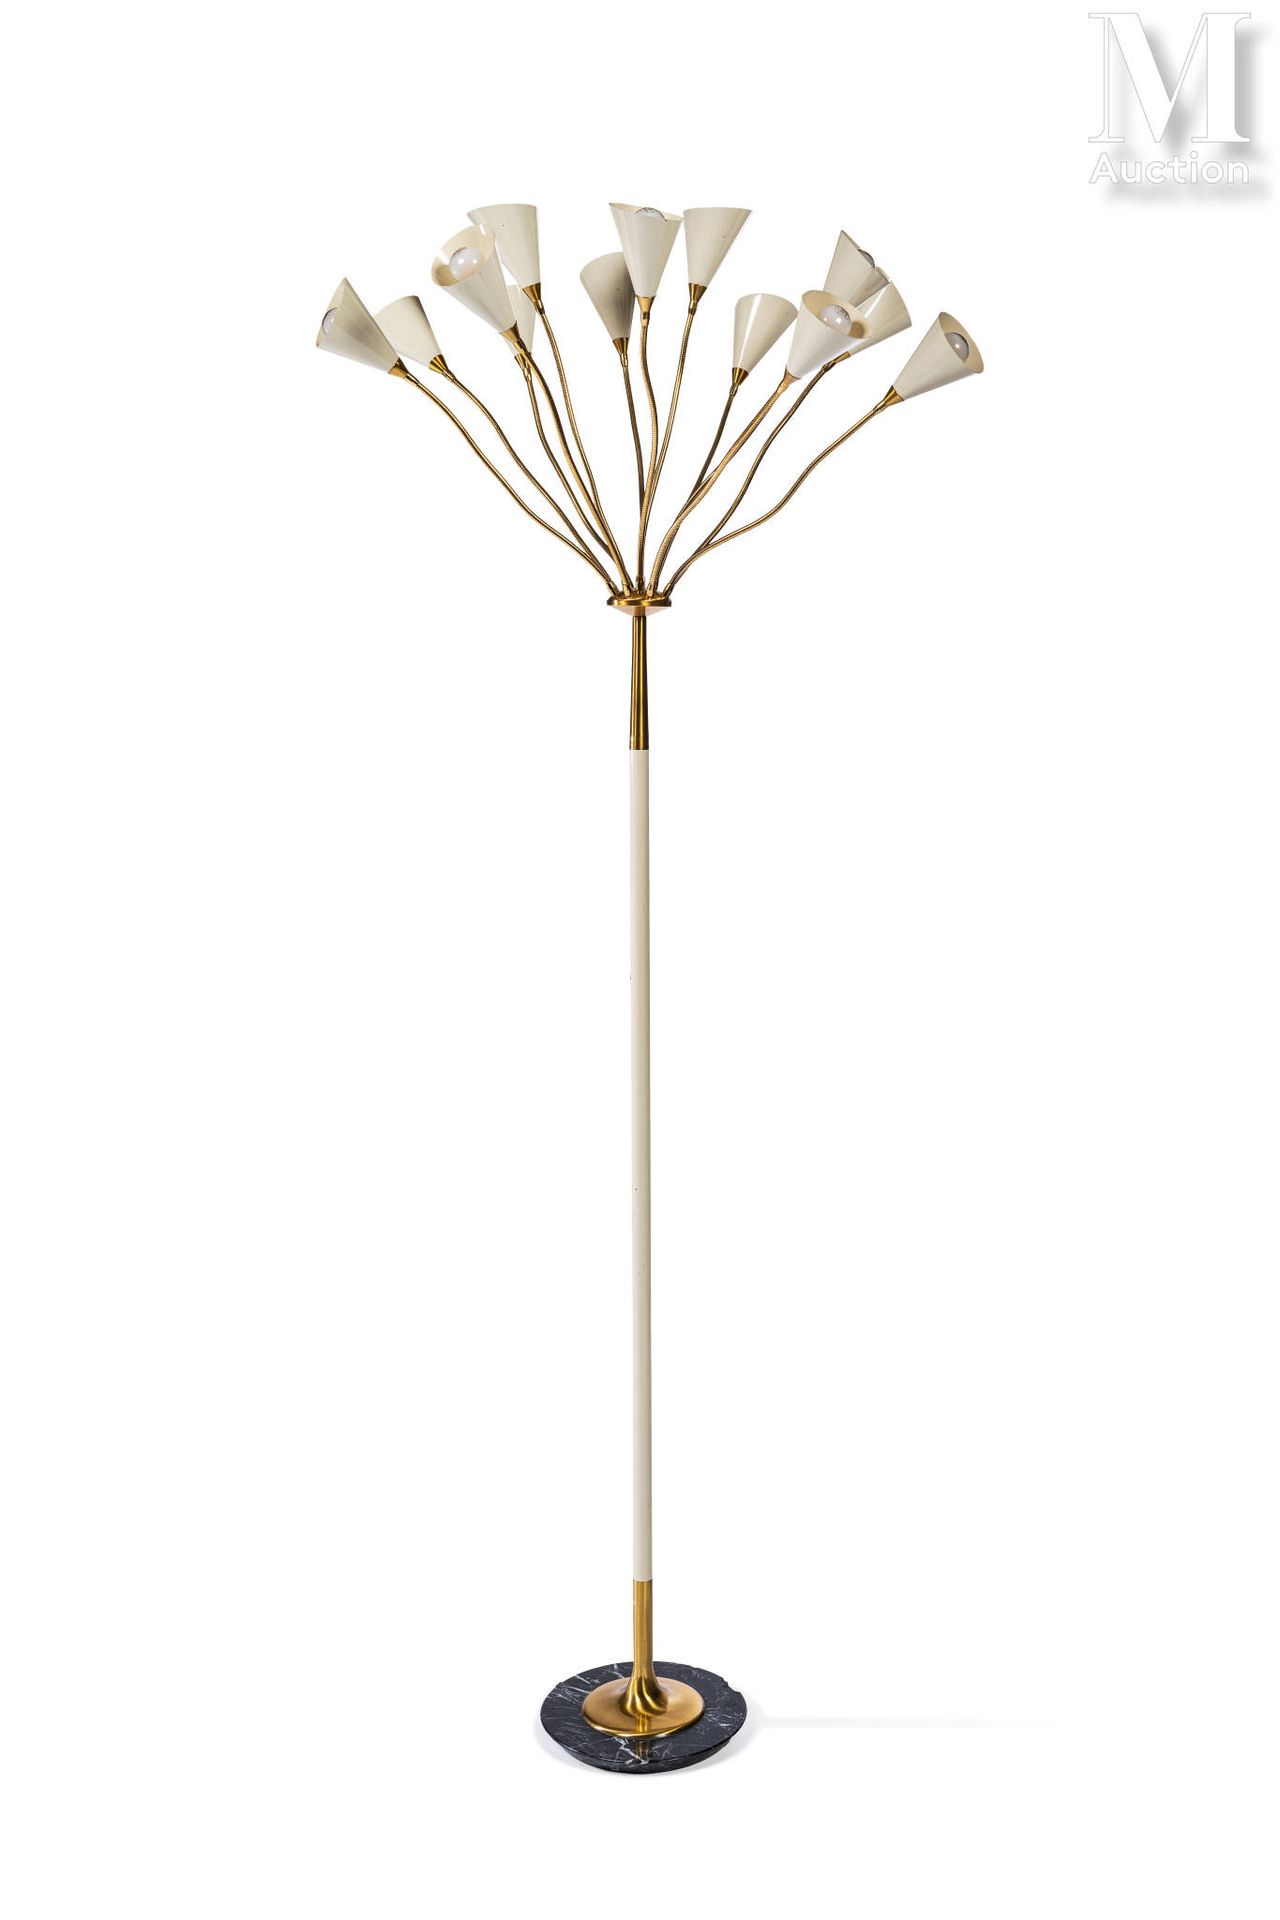 GINO SARFATTI (1912 - 1985) "1035型



创建于1948年

纪念版Arteluce

落地灯，有13个扶手，镀金黄铜和奶油色&hellip;